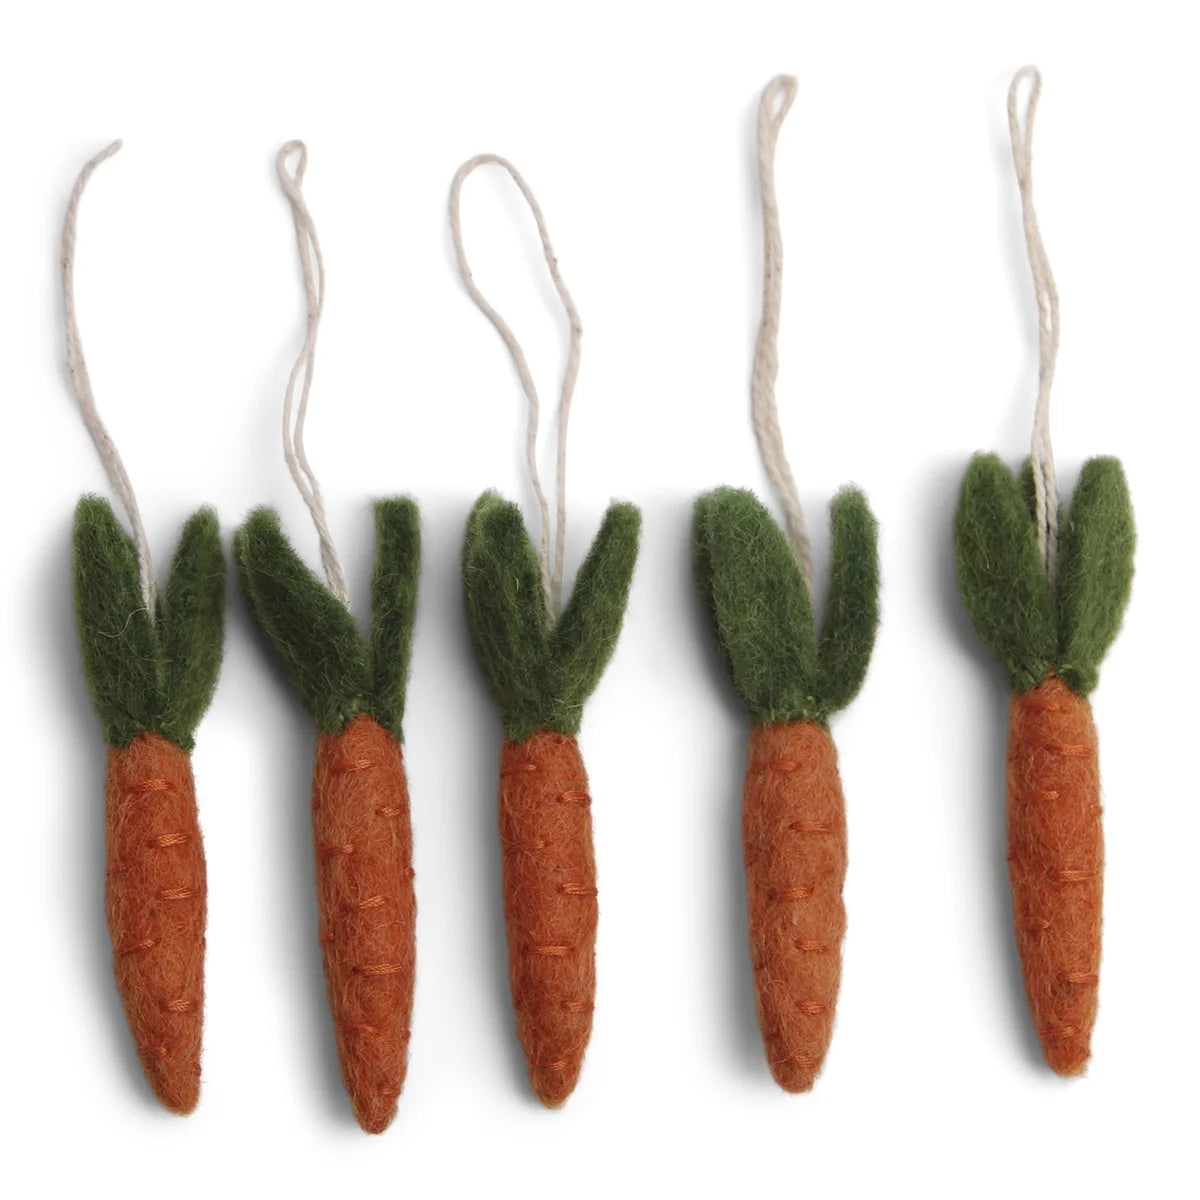 Carrots - to hang